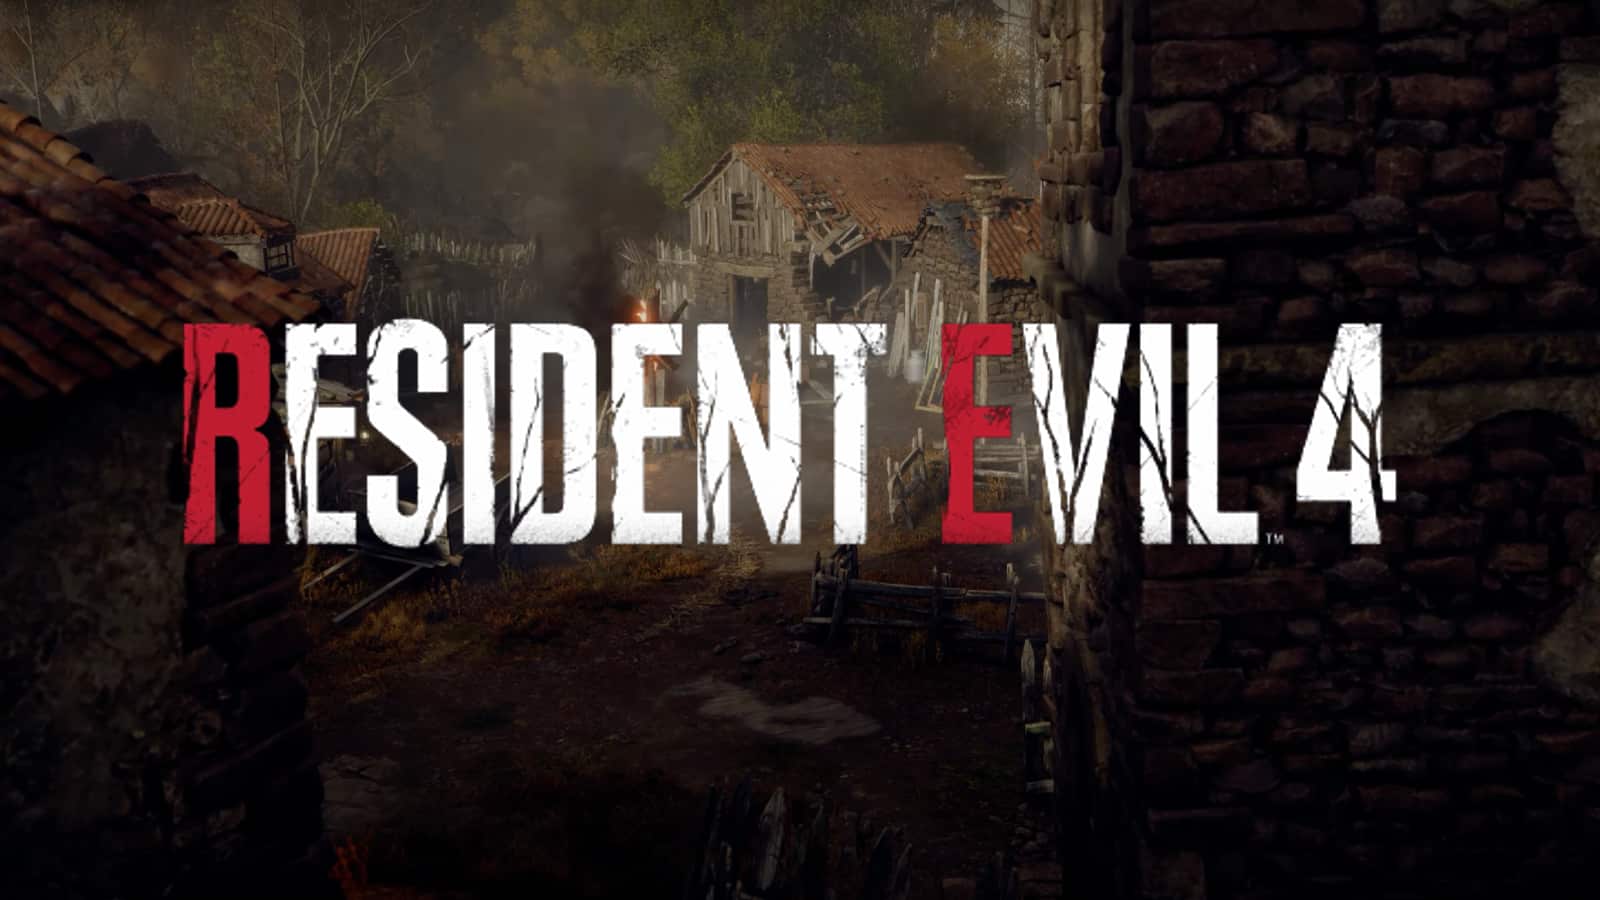 Resident Evil 4 remake adds PS4 version; Resident Evil Showcase